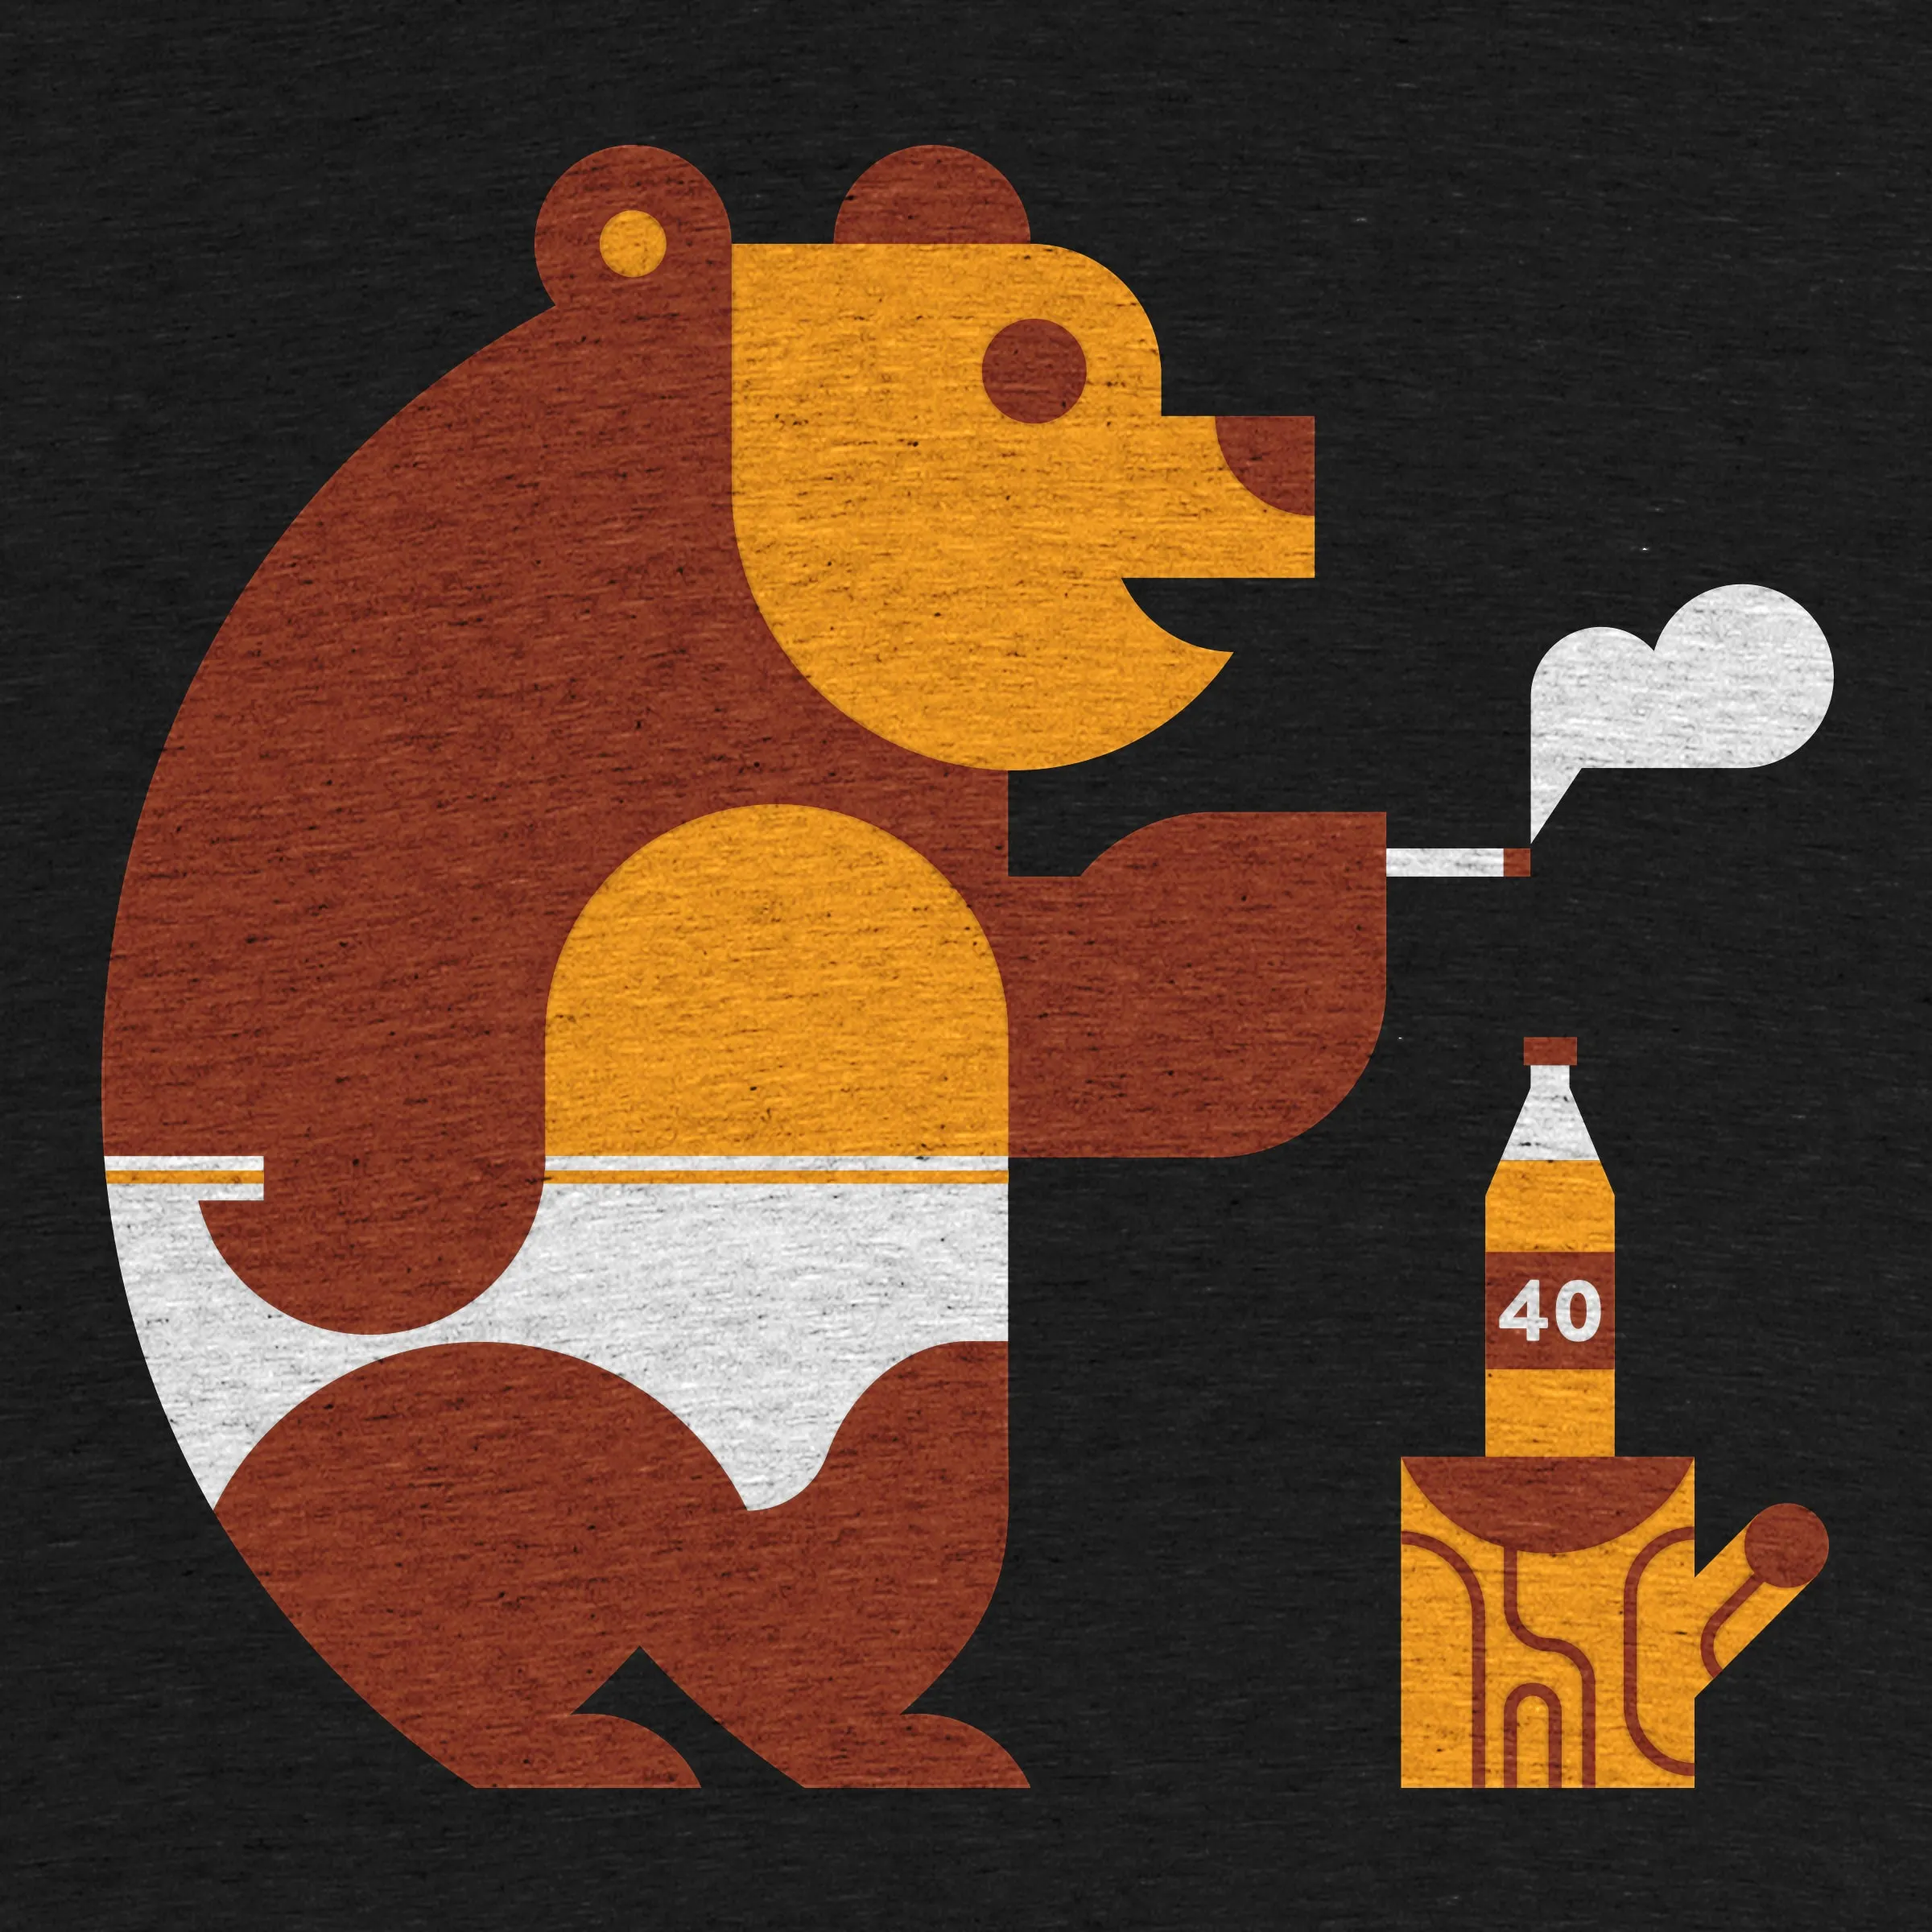 Bear In Underwear” graphic tee and pullover crewneck by Luke Bott